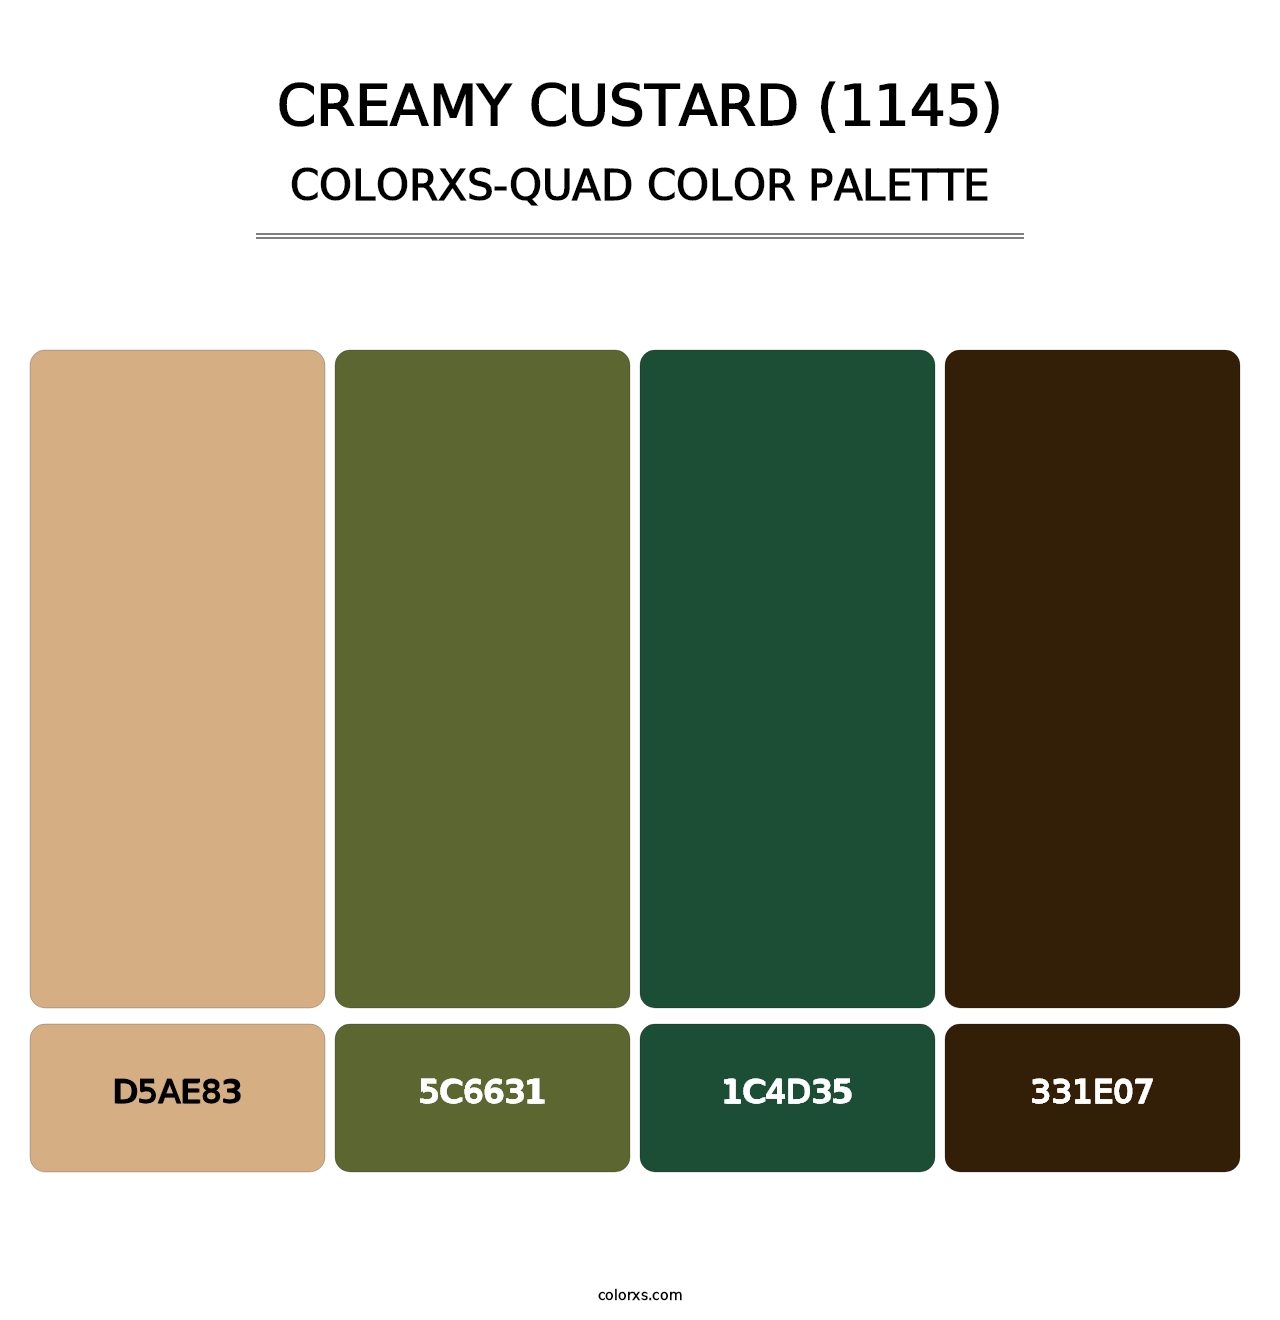 Creamy Custard (1145) - Colorxs Quad Palette